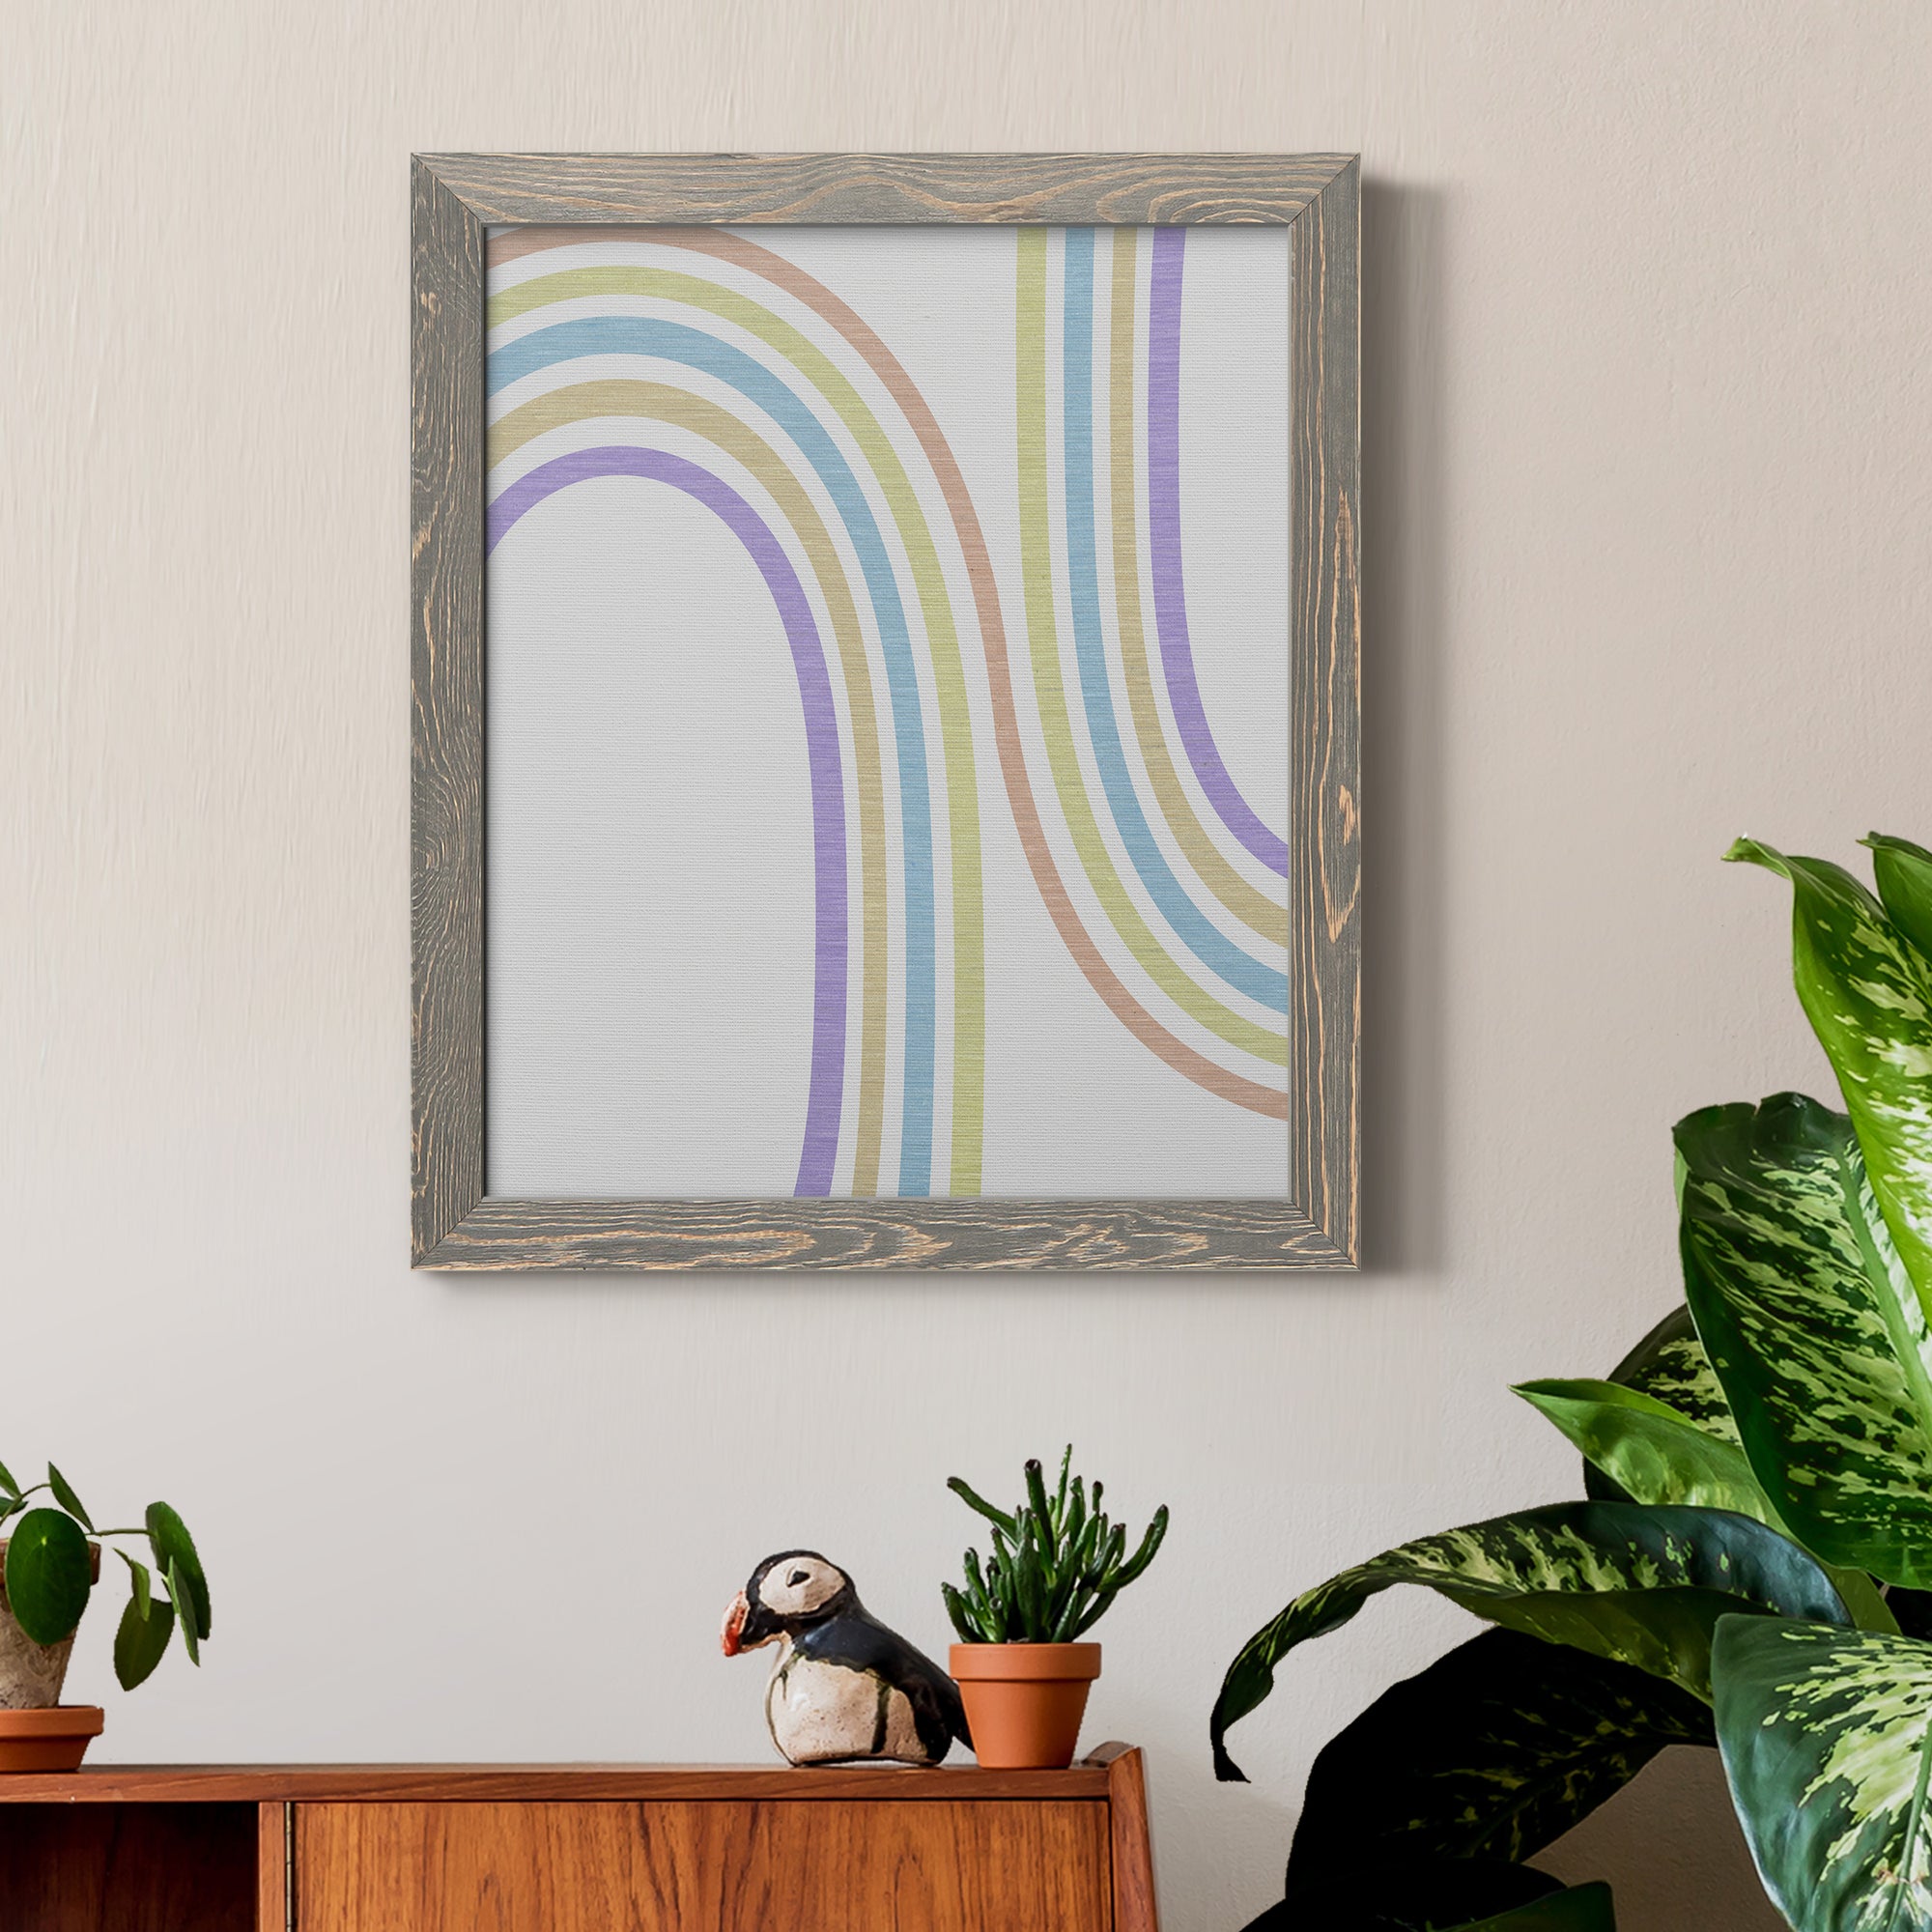 Tubular Abstract III - Premium Canvas Framed in Barnwood - Ready to Hang